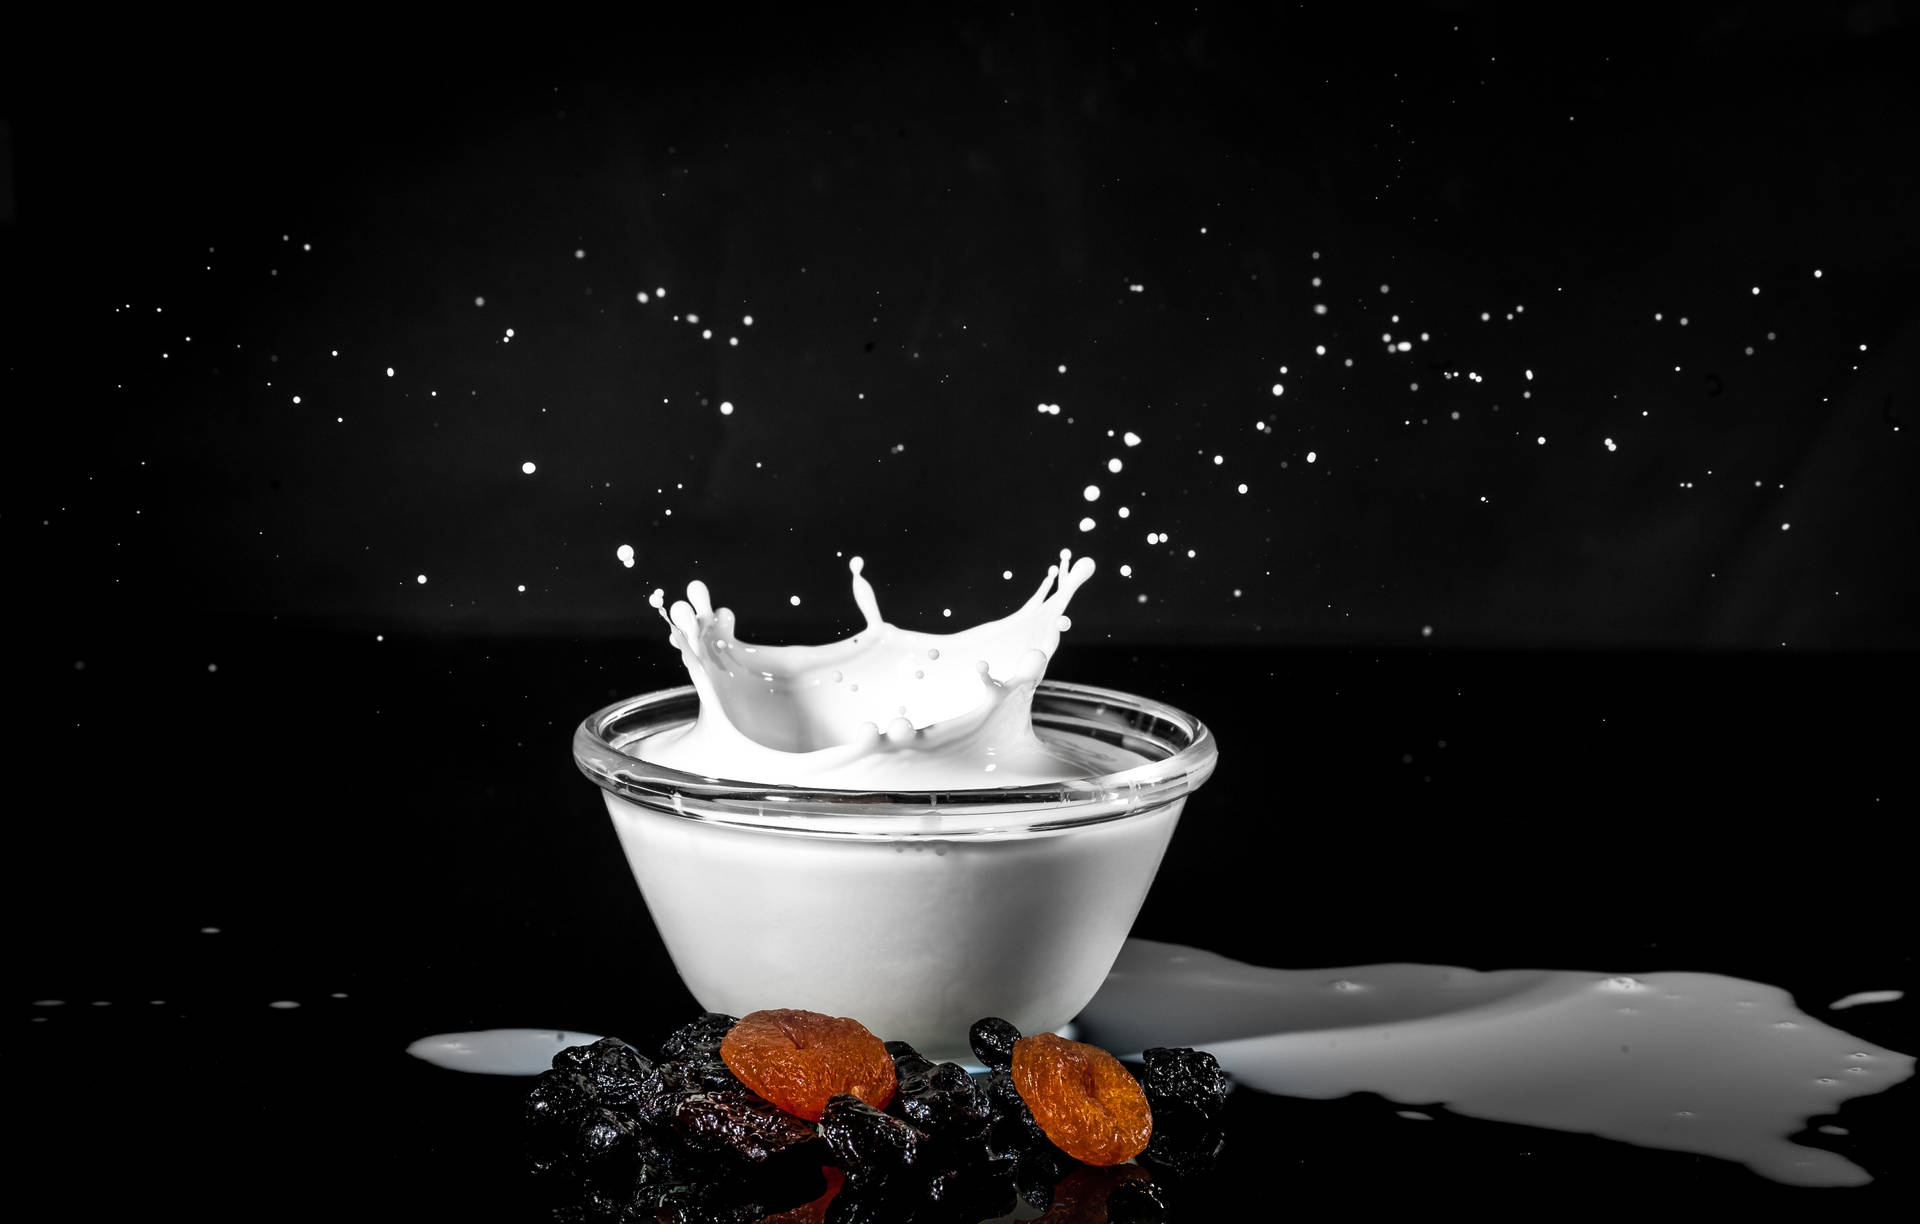 Spilt Milk Splash Captured In Glass Bowl